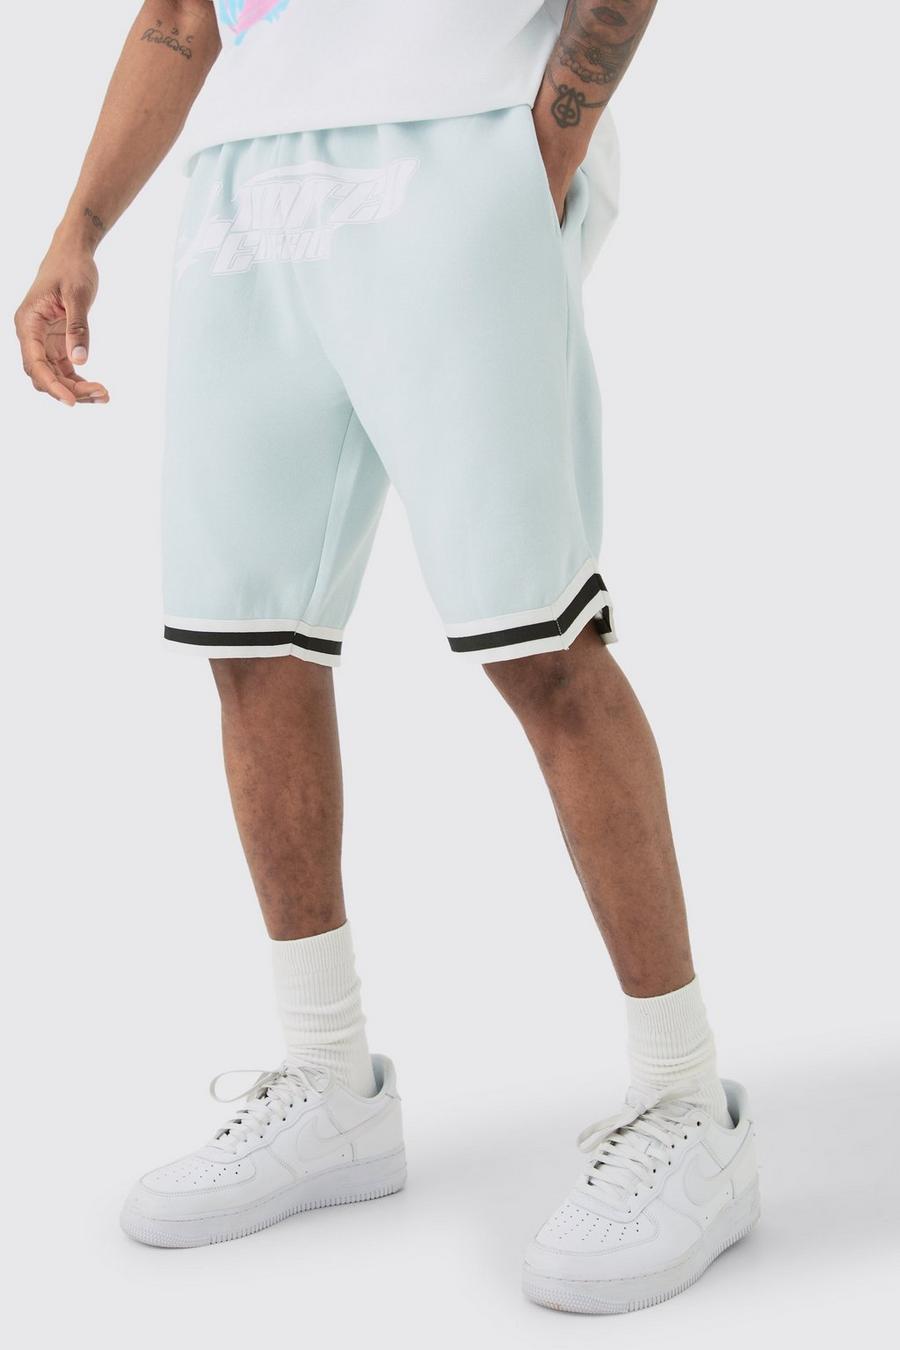 Pantaloncini da basket Tall comodi Limited Edition blu Lt, Light blue